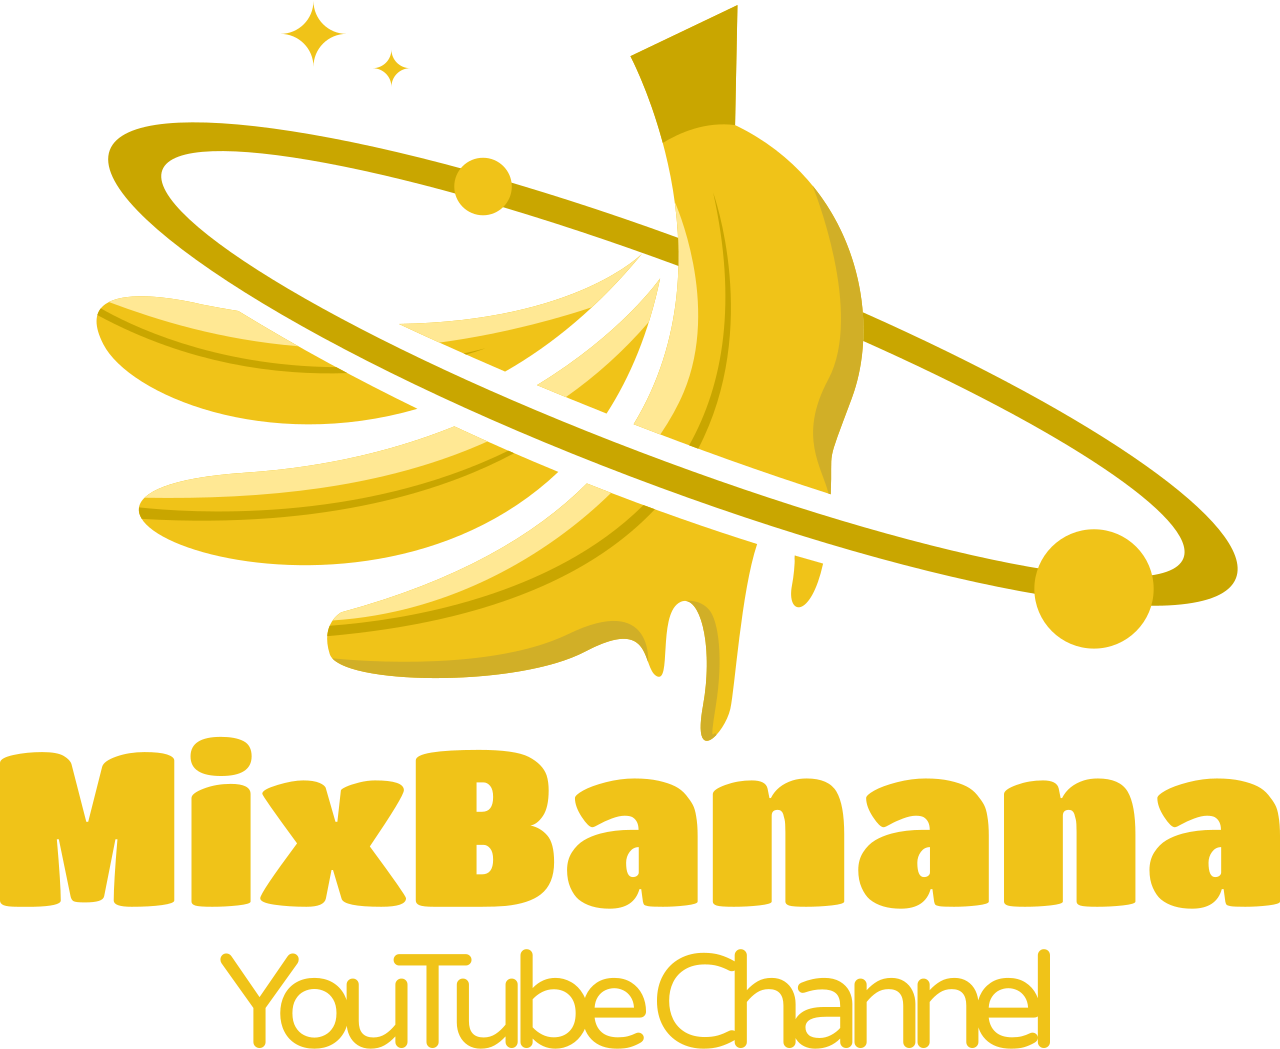 MixBanana's web page